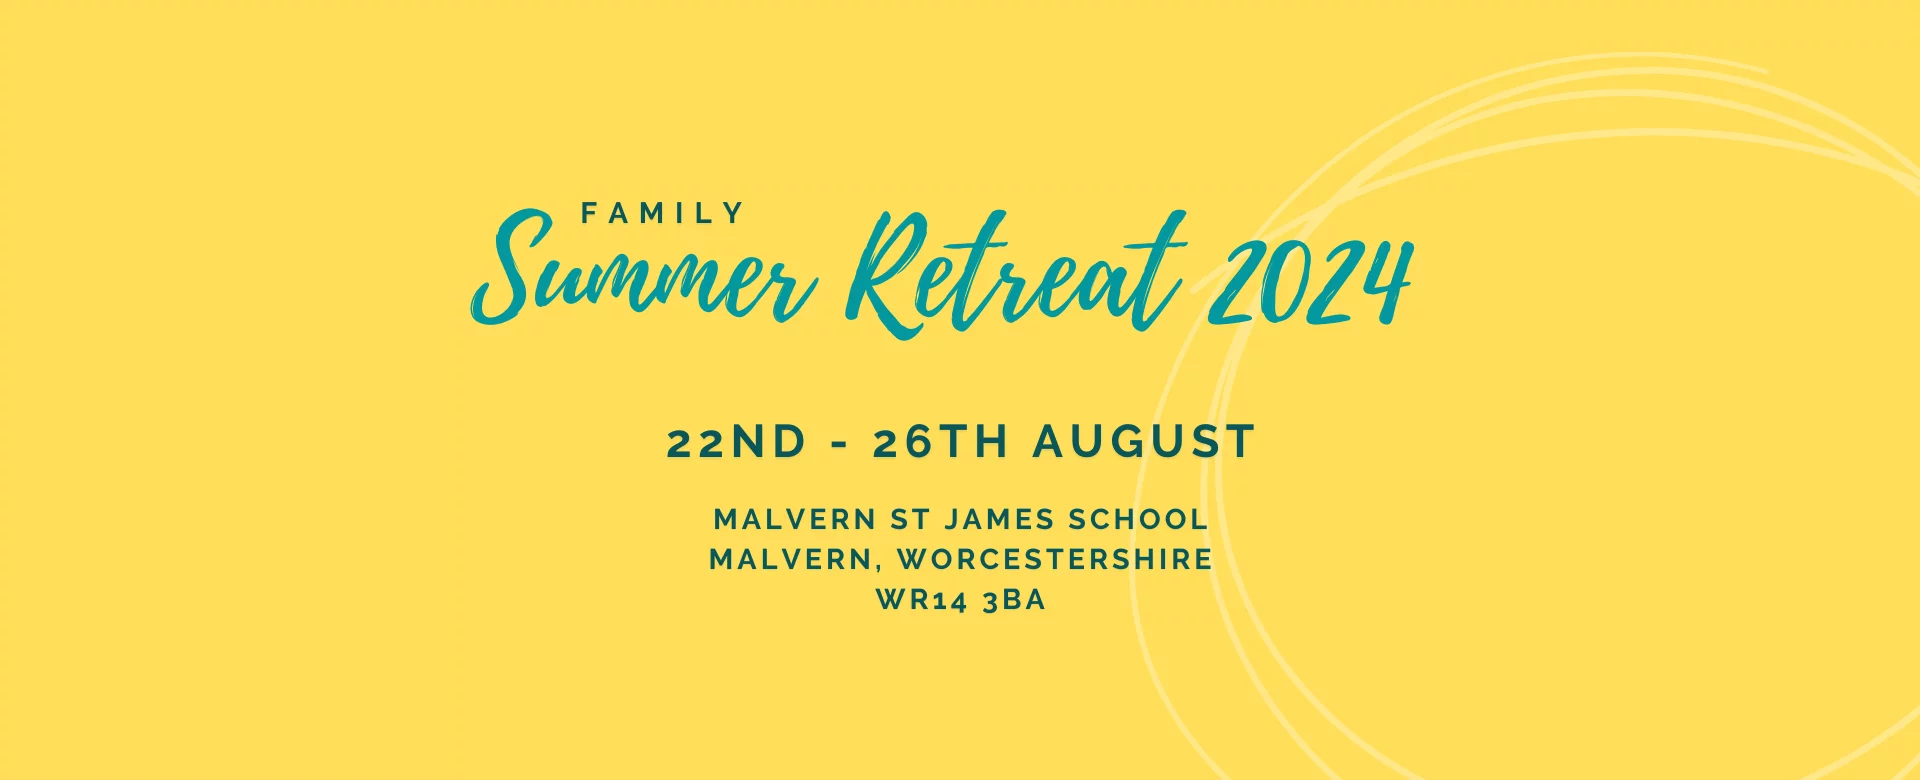 Family summer retreat